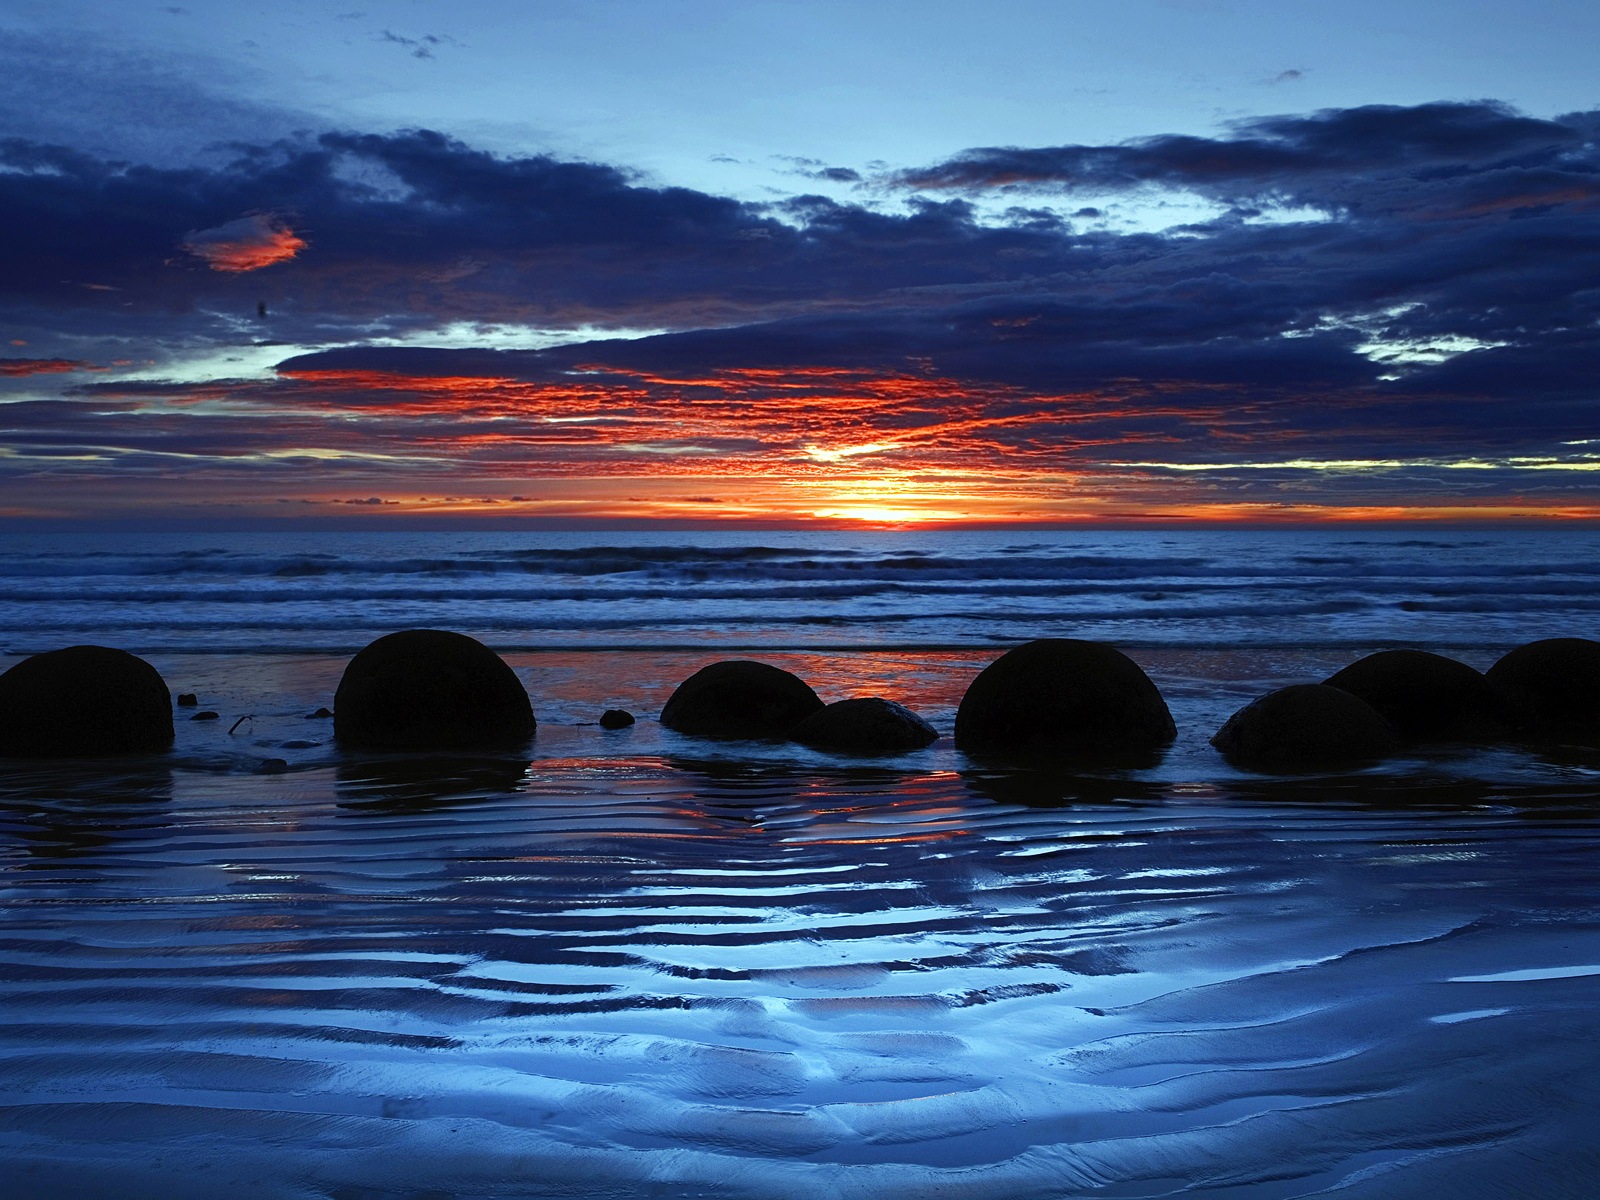 Windows 8 theme wallpaper: Beach sunrise and sunset views #14 - 1600x1200